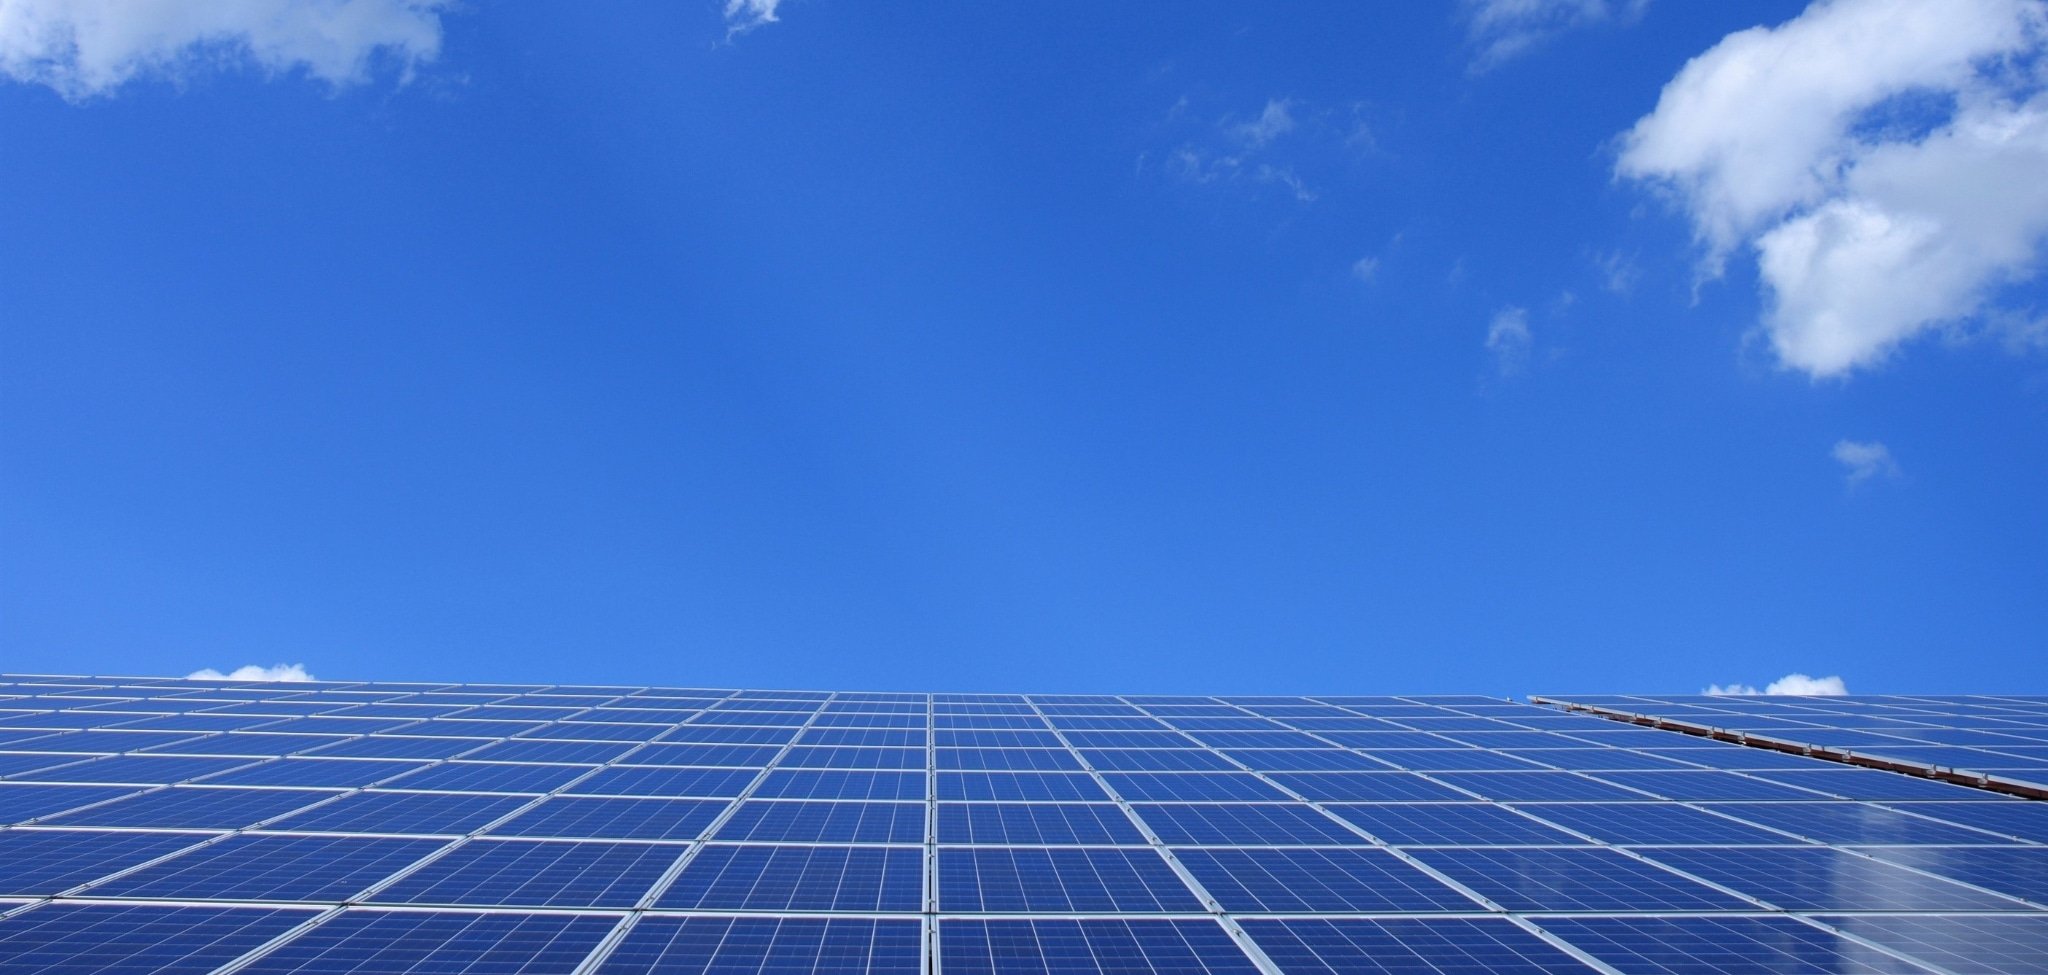 Solar panels against the blue sky